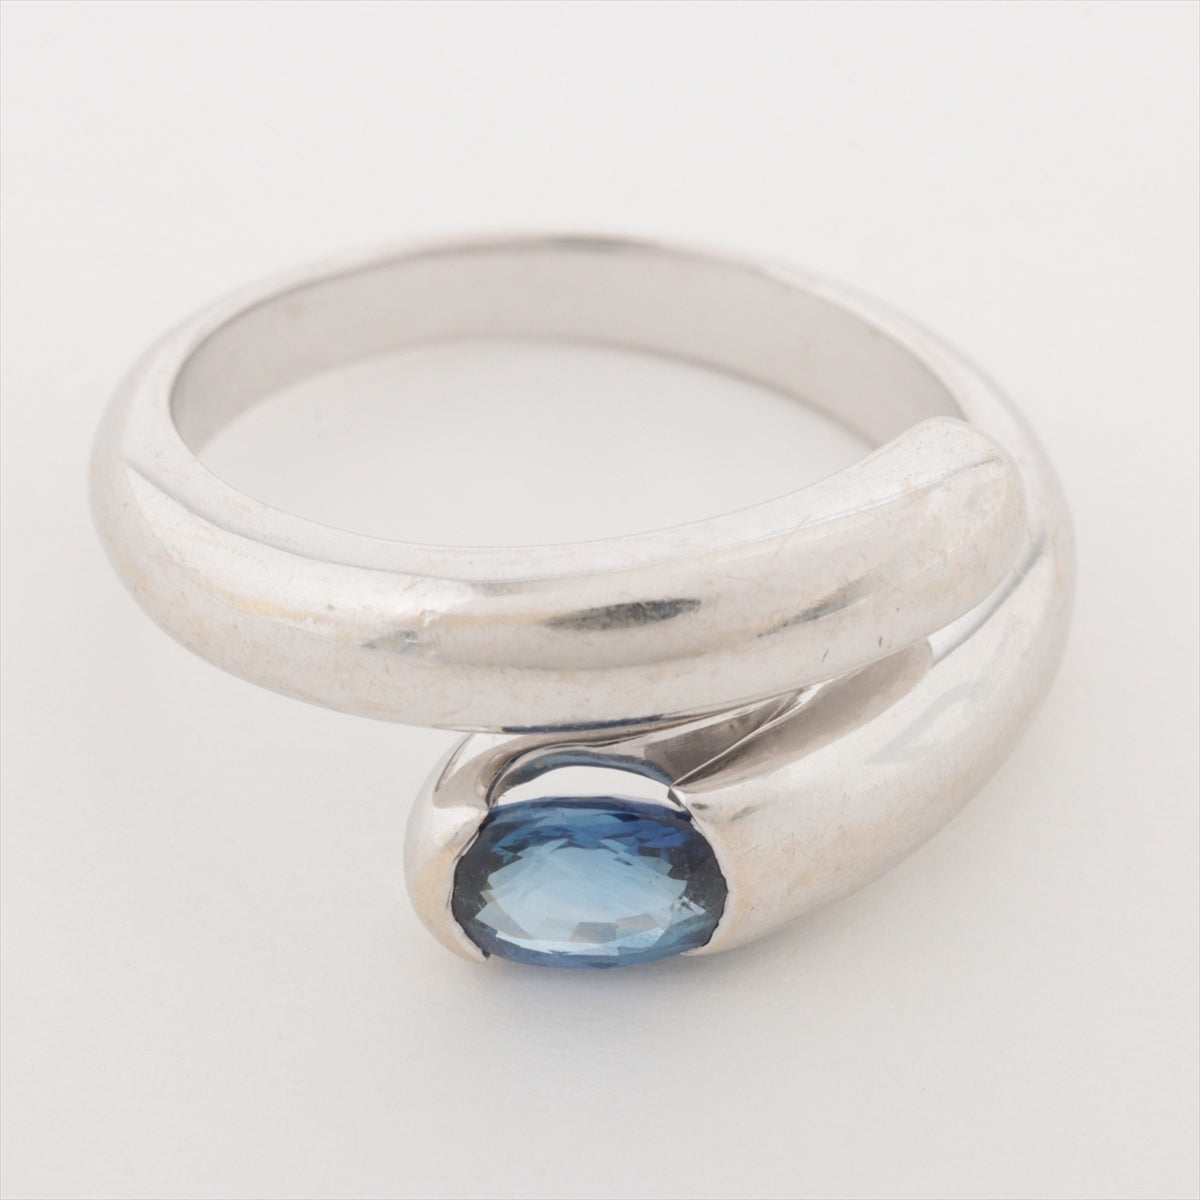 Bvlgari Astrea Sapphire rings 750(WG) 5.4g Engraving blur Plating peeling